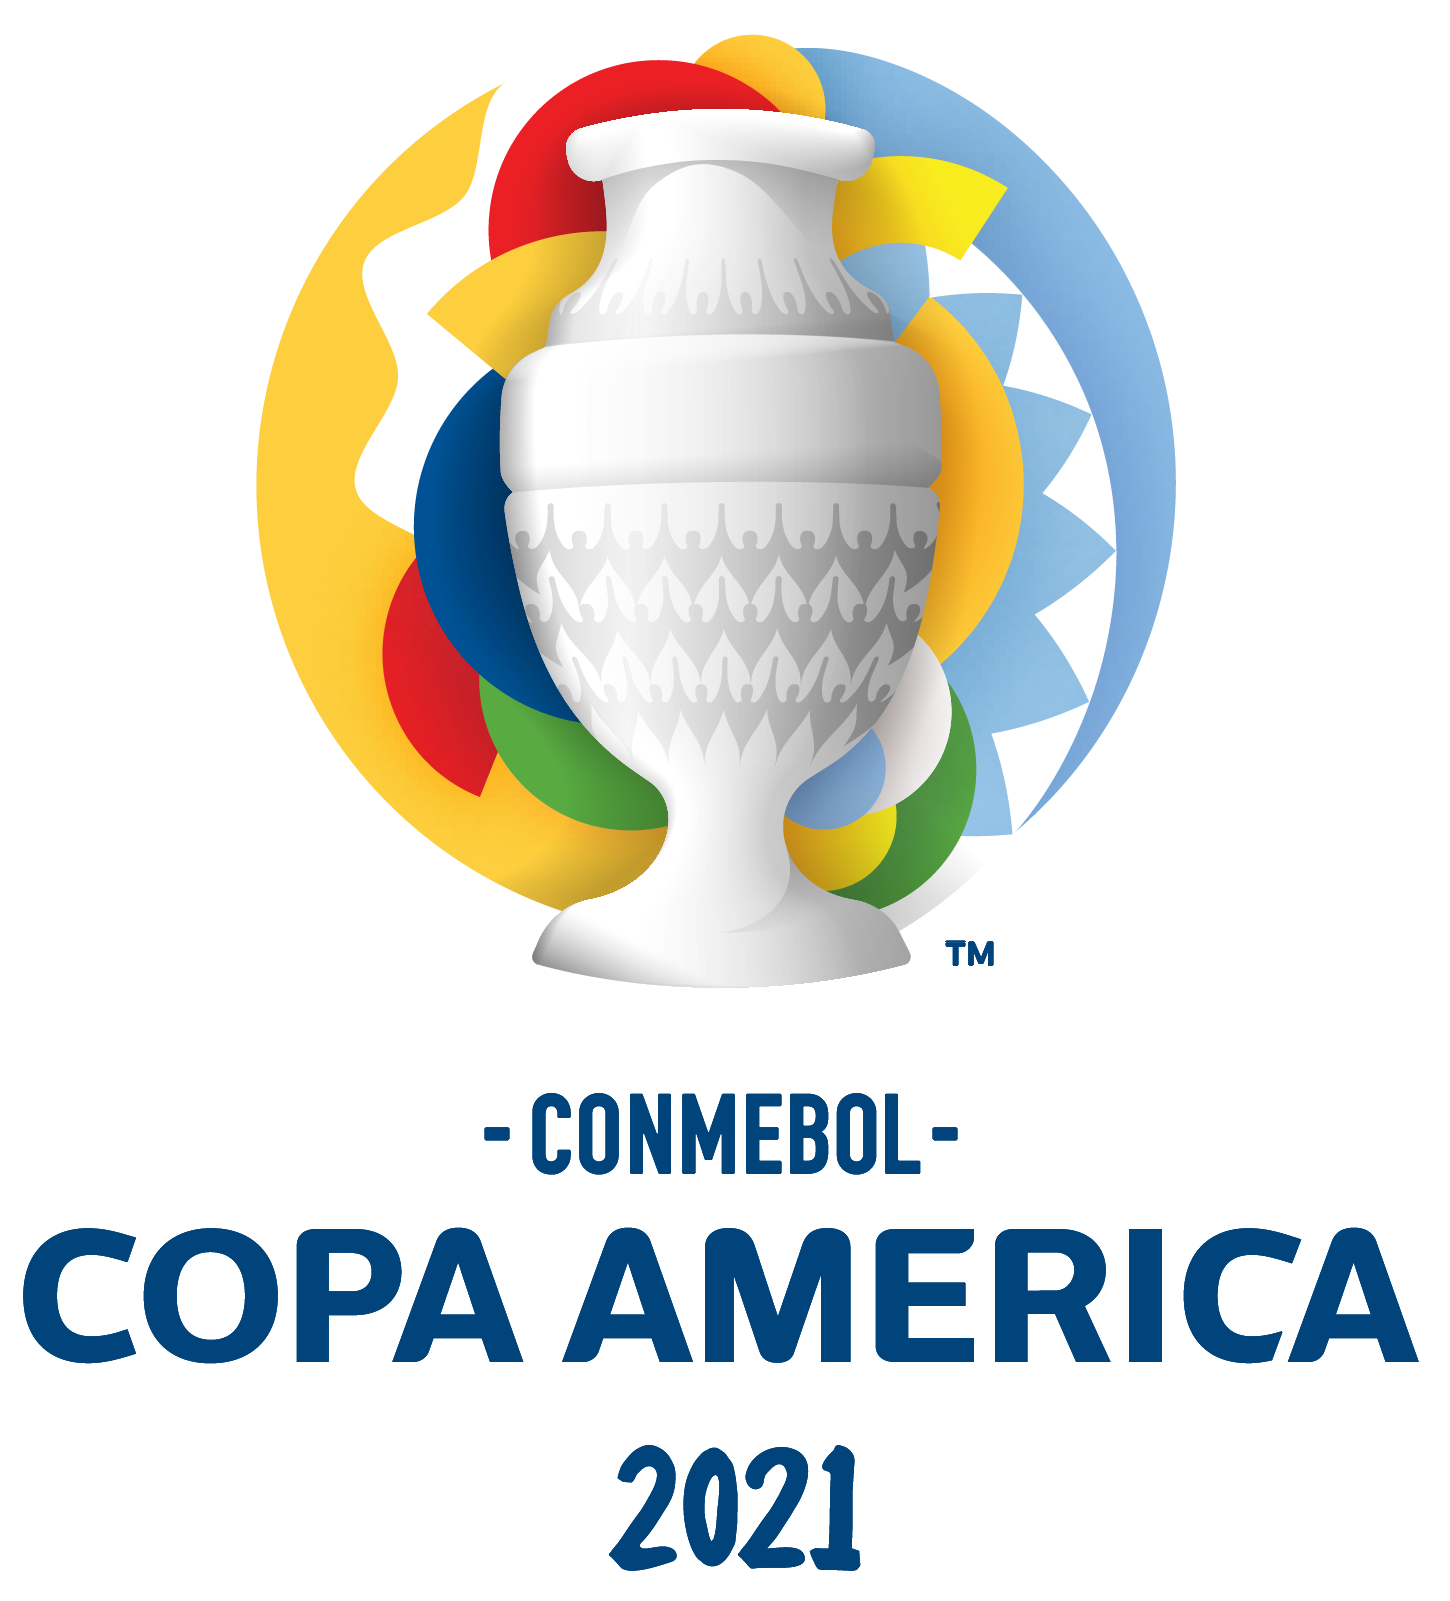 CONMEBOL Copa America 2021 logo